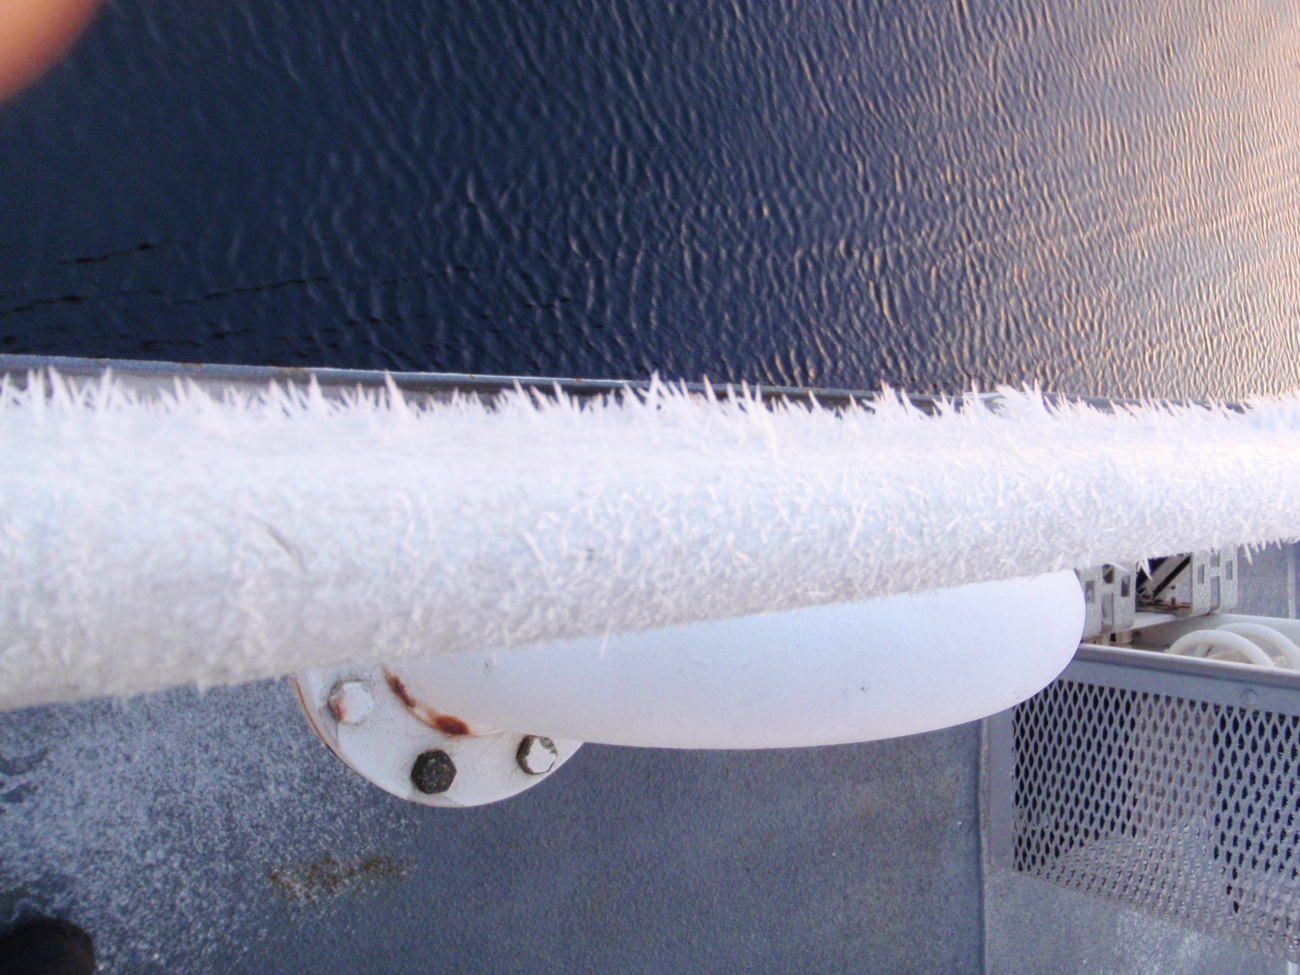 Rime ice on railing